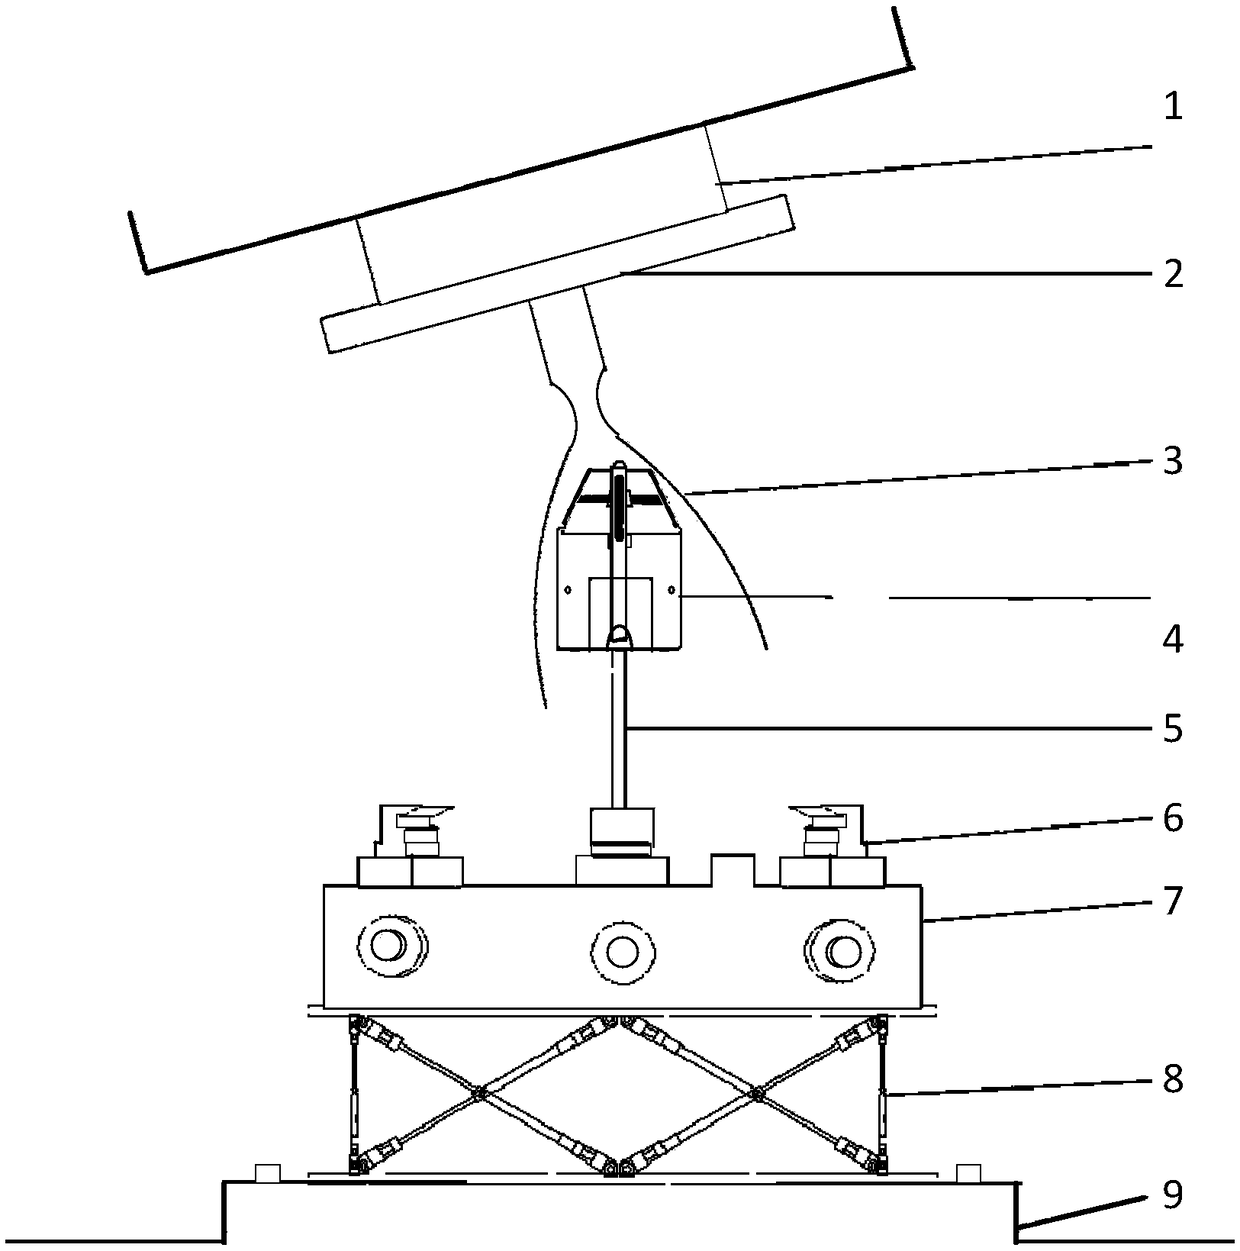 Spacecraft capture system based on nozzle capture and satellite-rocket docking ring locking